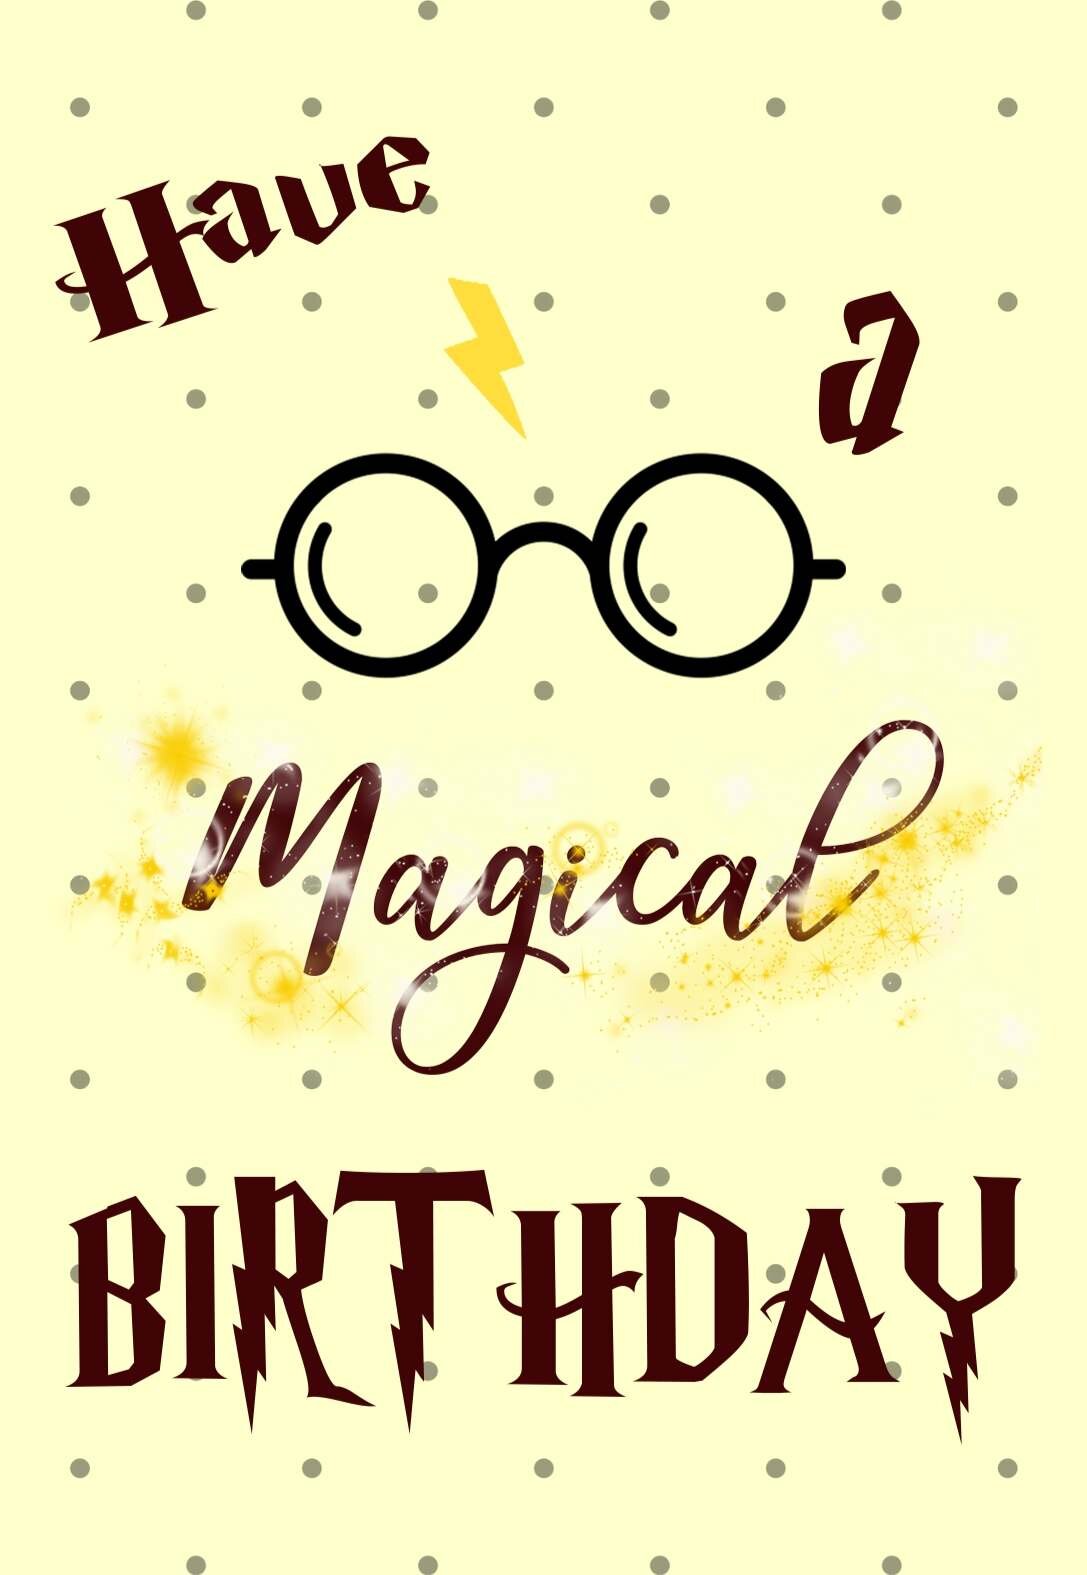 Happy Birthday Harry Potter Images EdieChristiana